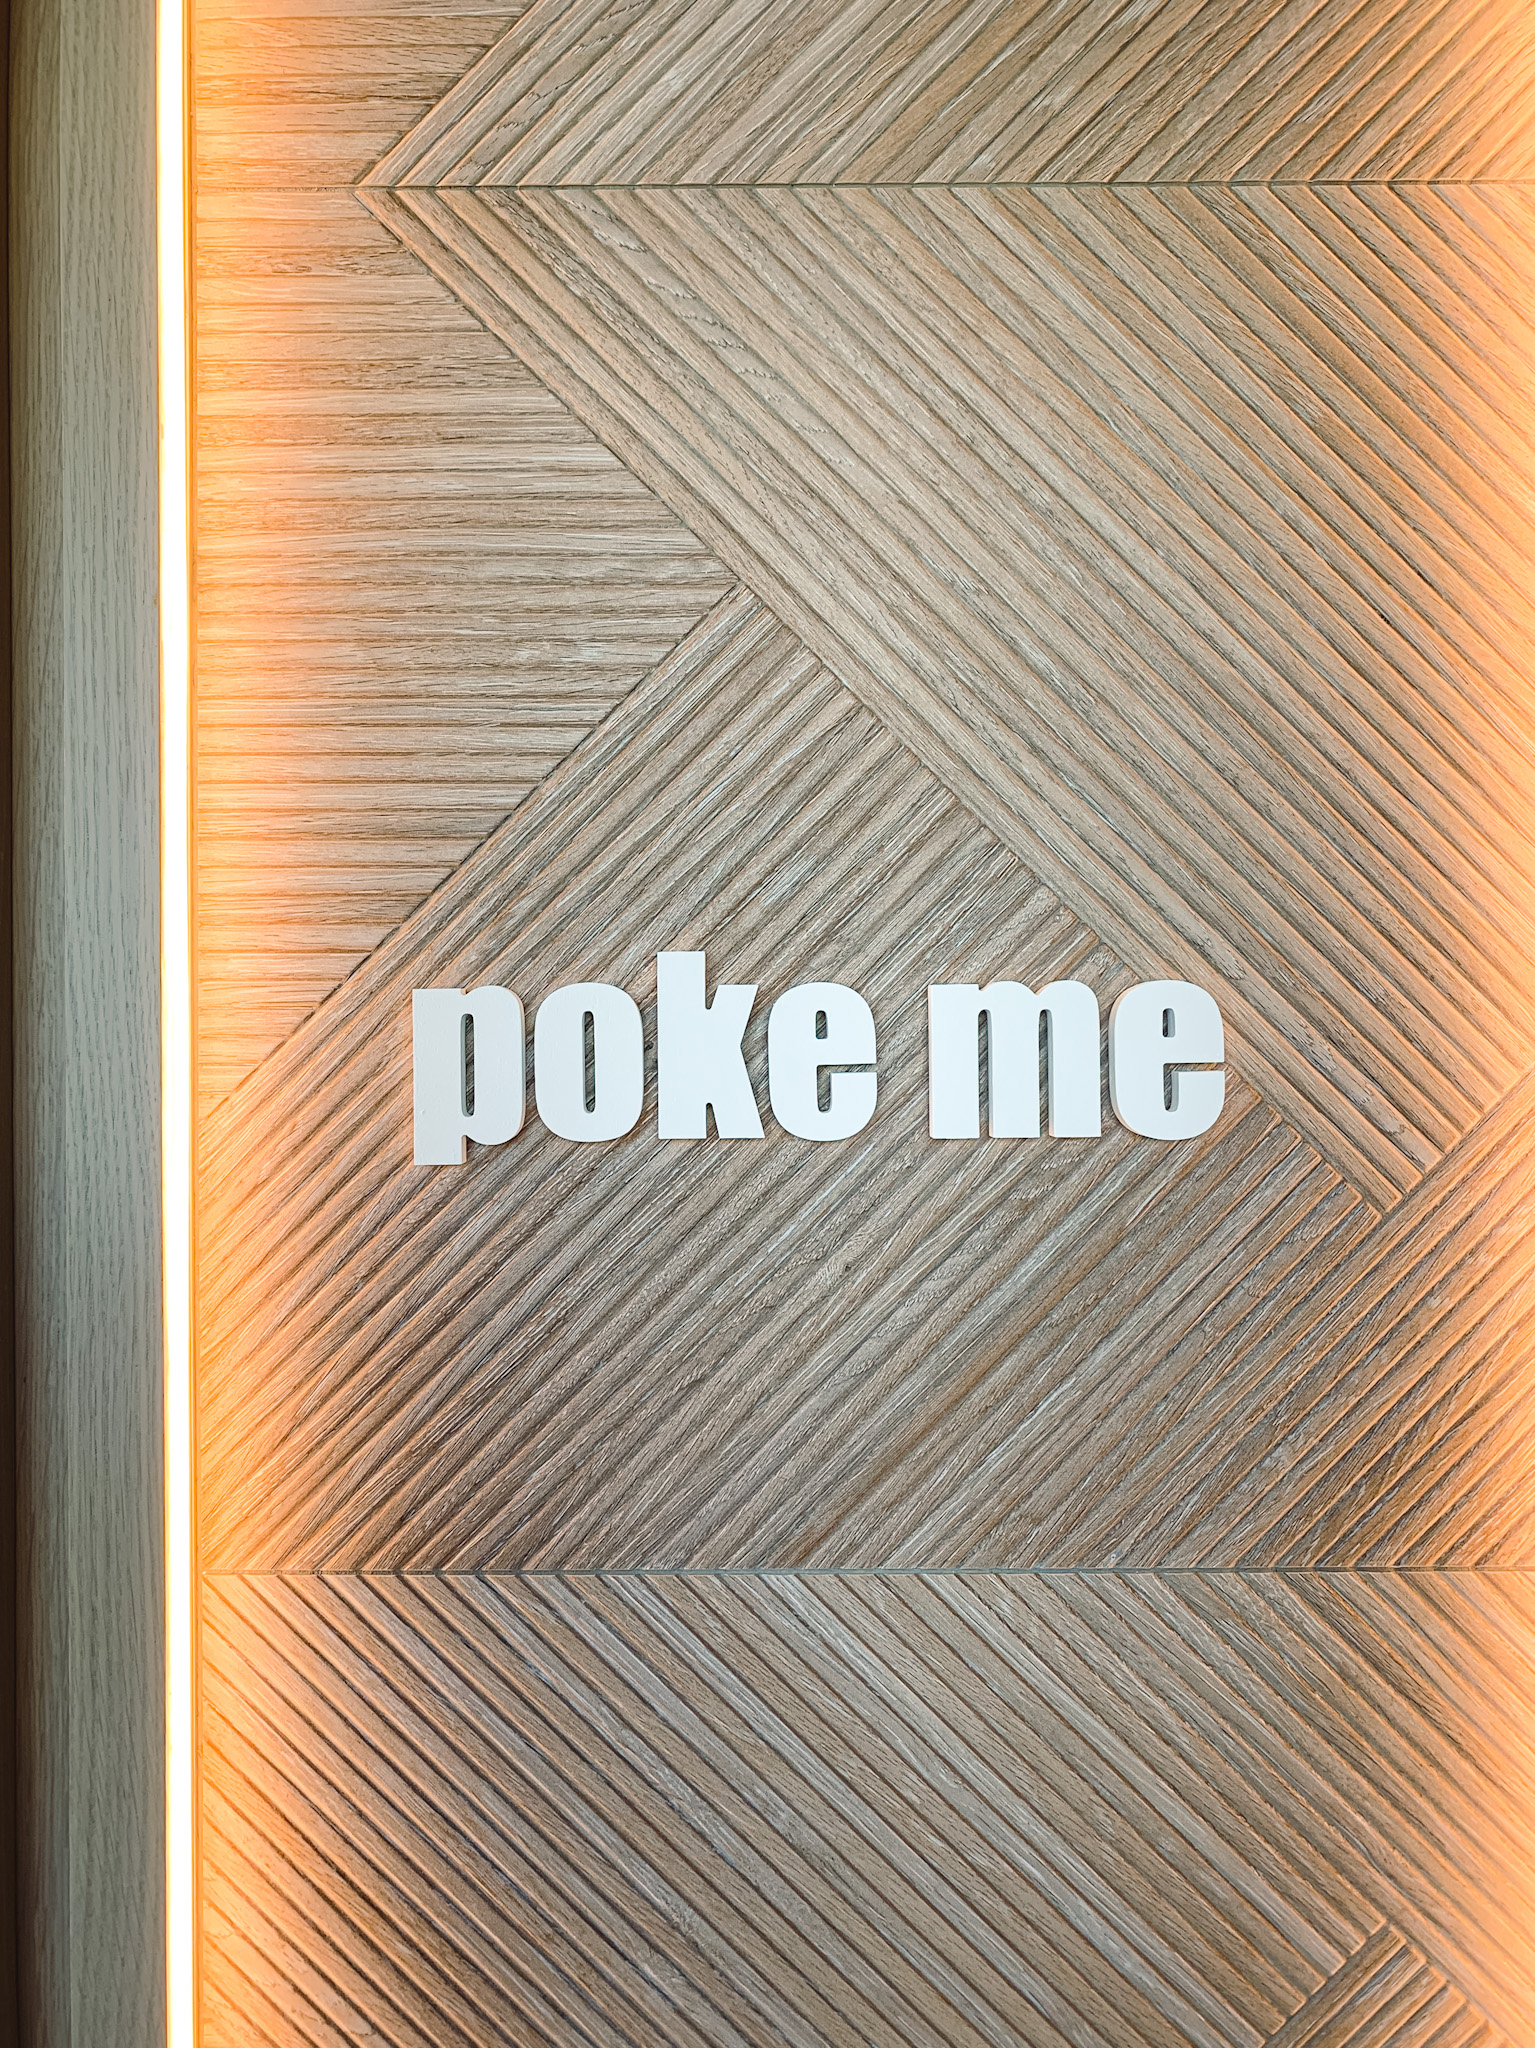 "Poke me" sign at Poke Guys in Vaughan, Ontario